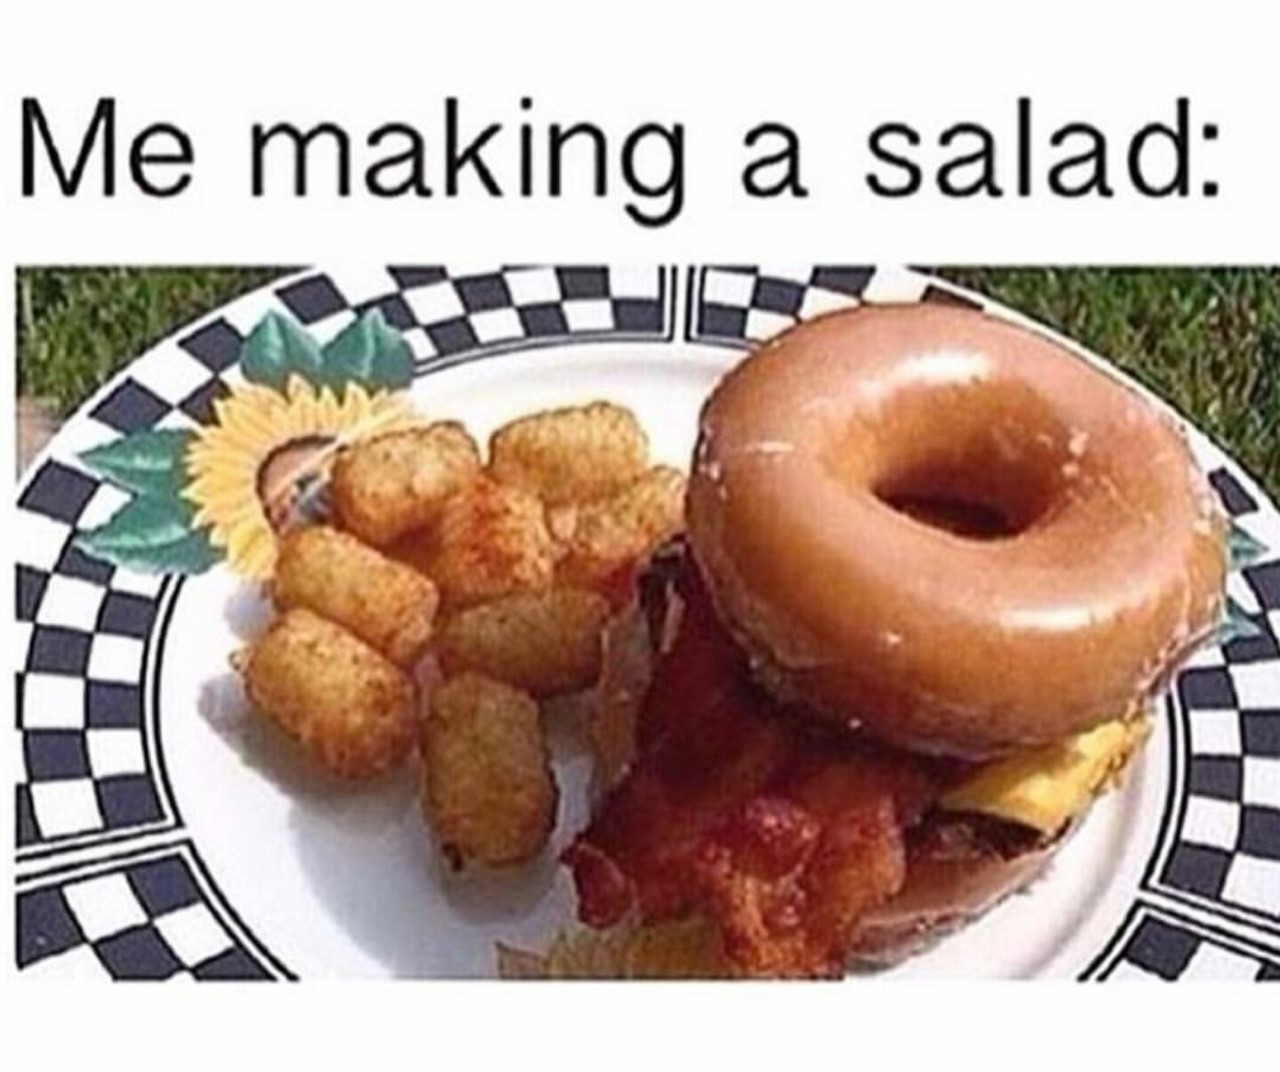 memes - me making a salad meme - Me making a salad